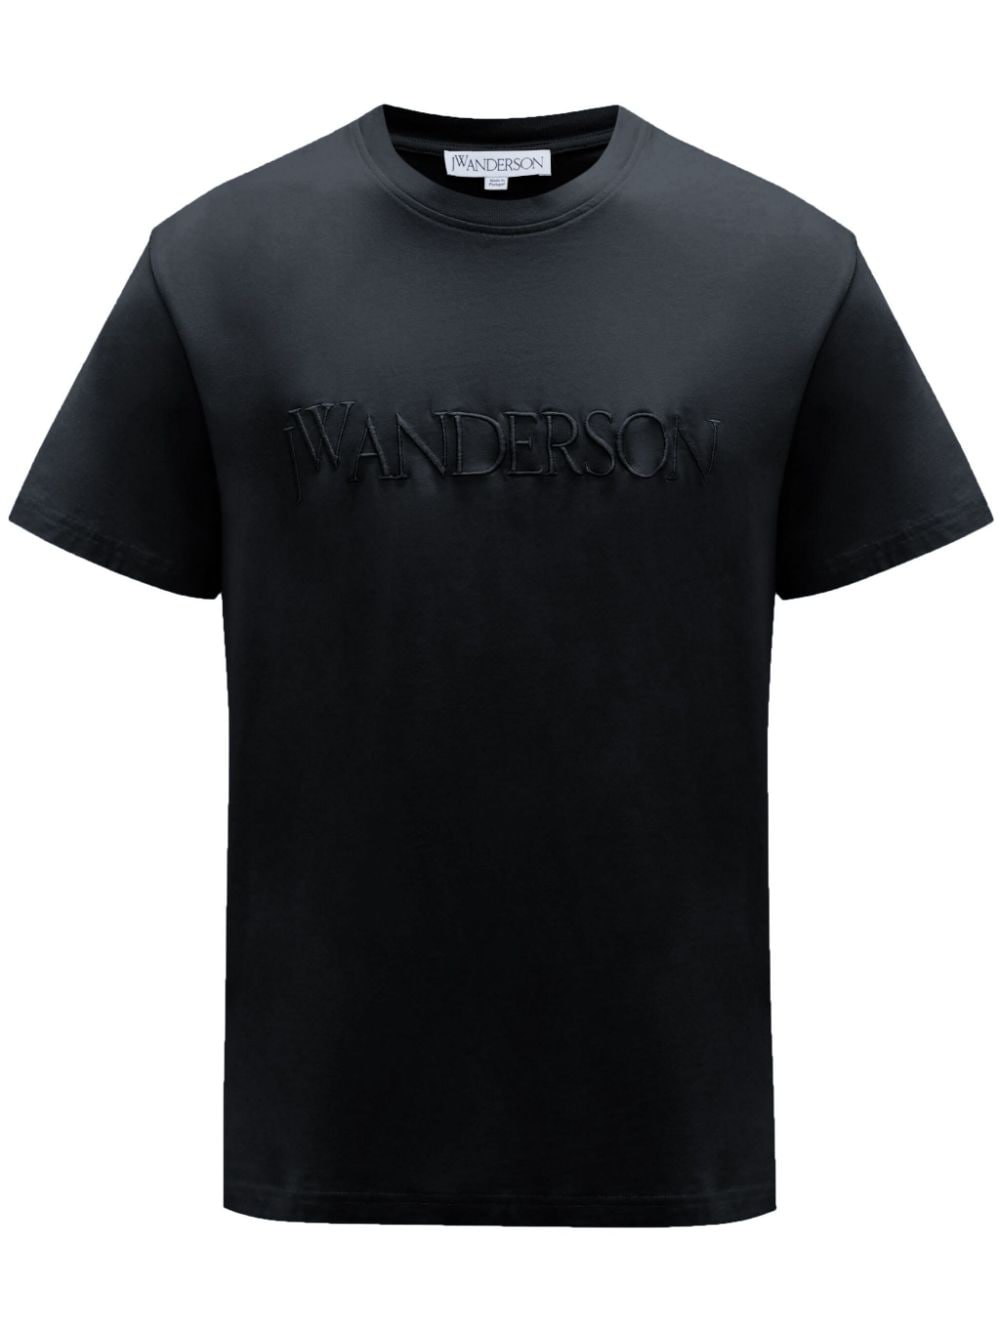 Embroidered logo black t-shirt